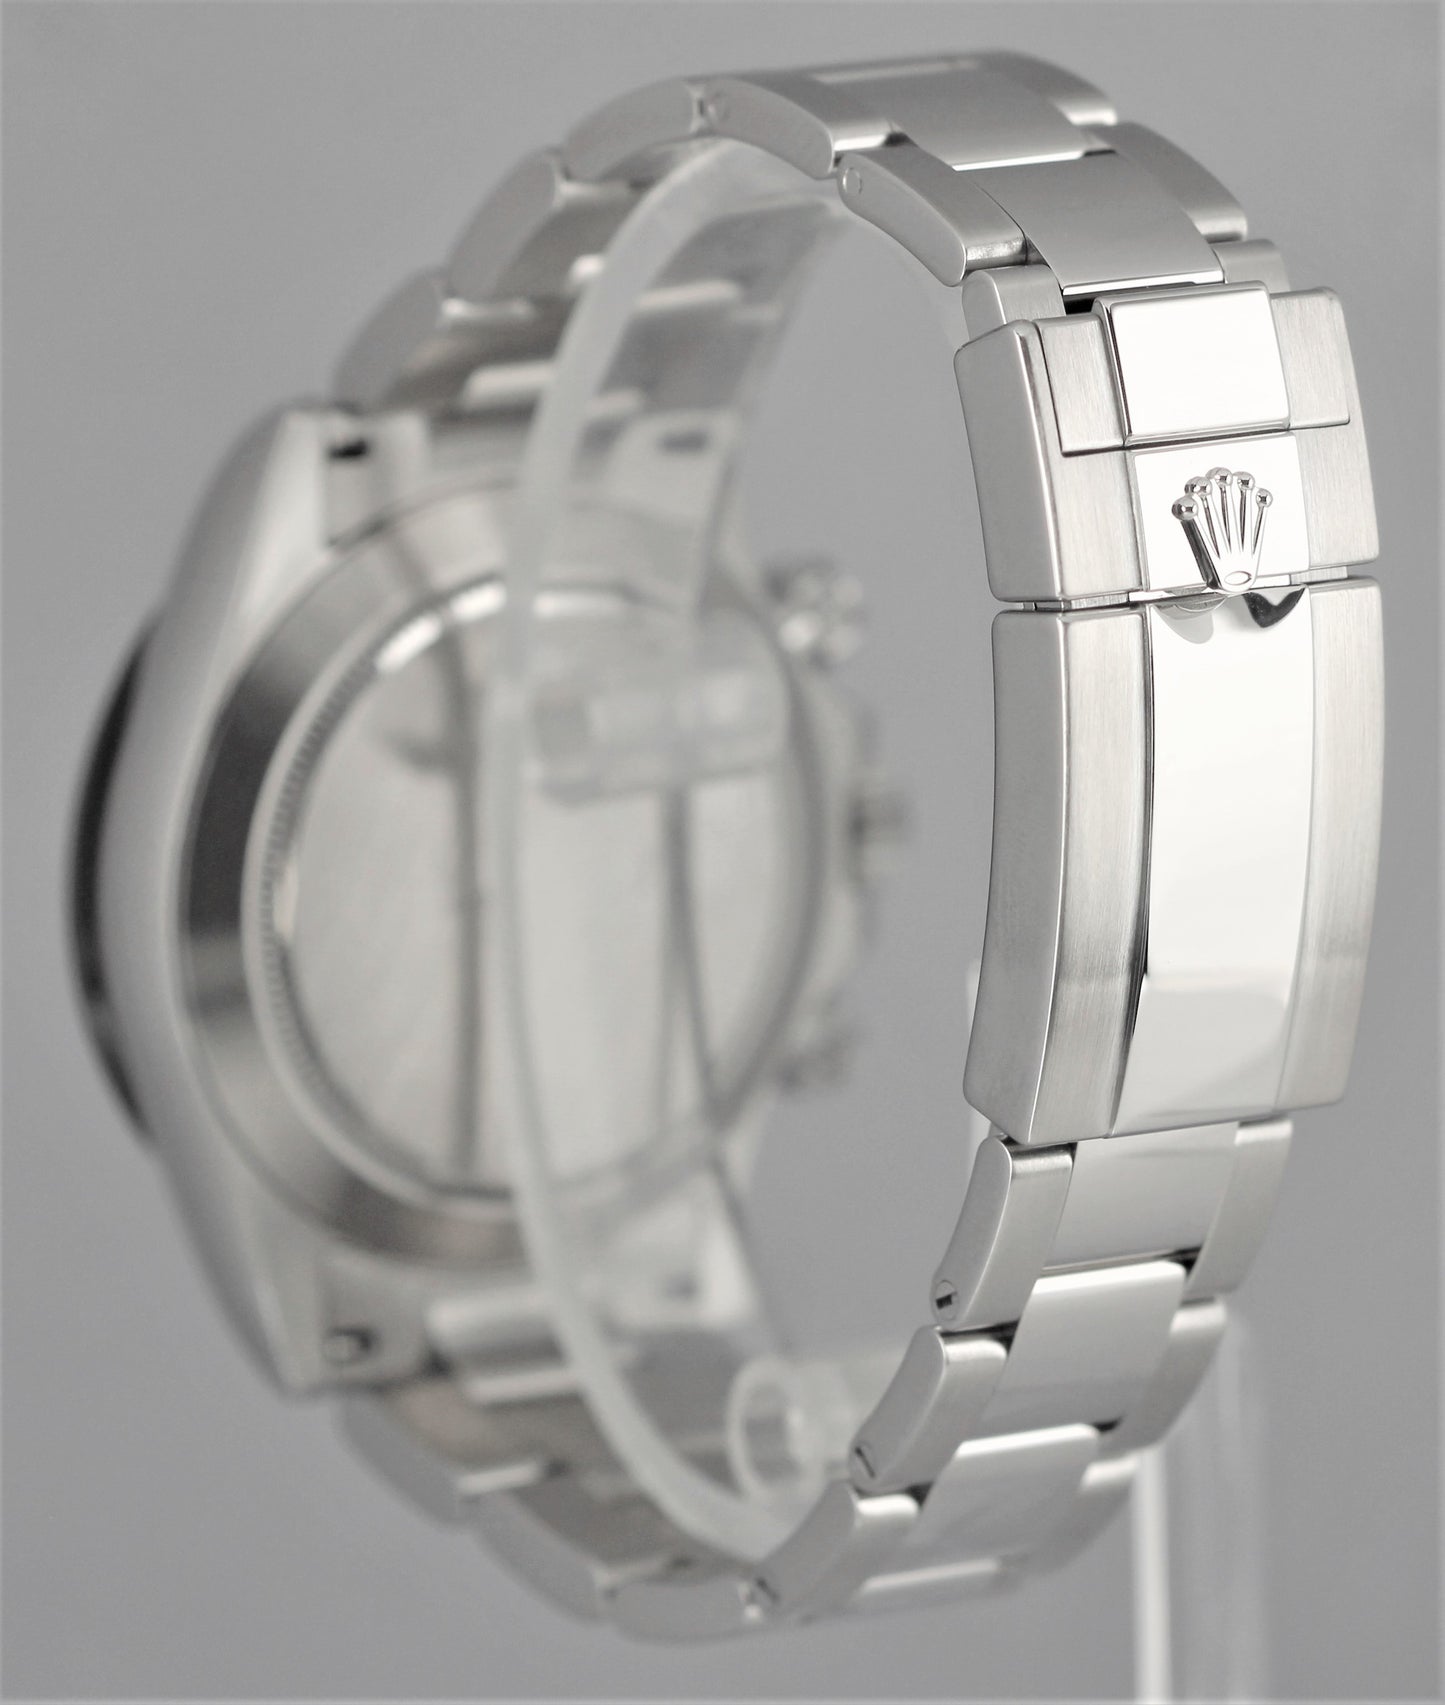 2022 Rolex Daytona Cosmograph Stainless Steel Black 40mm 116500LN Watch BOX